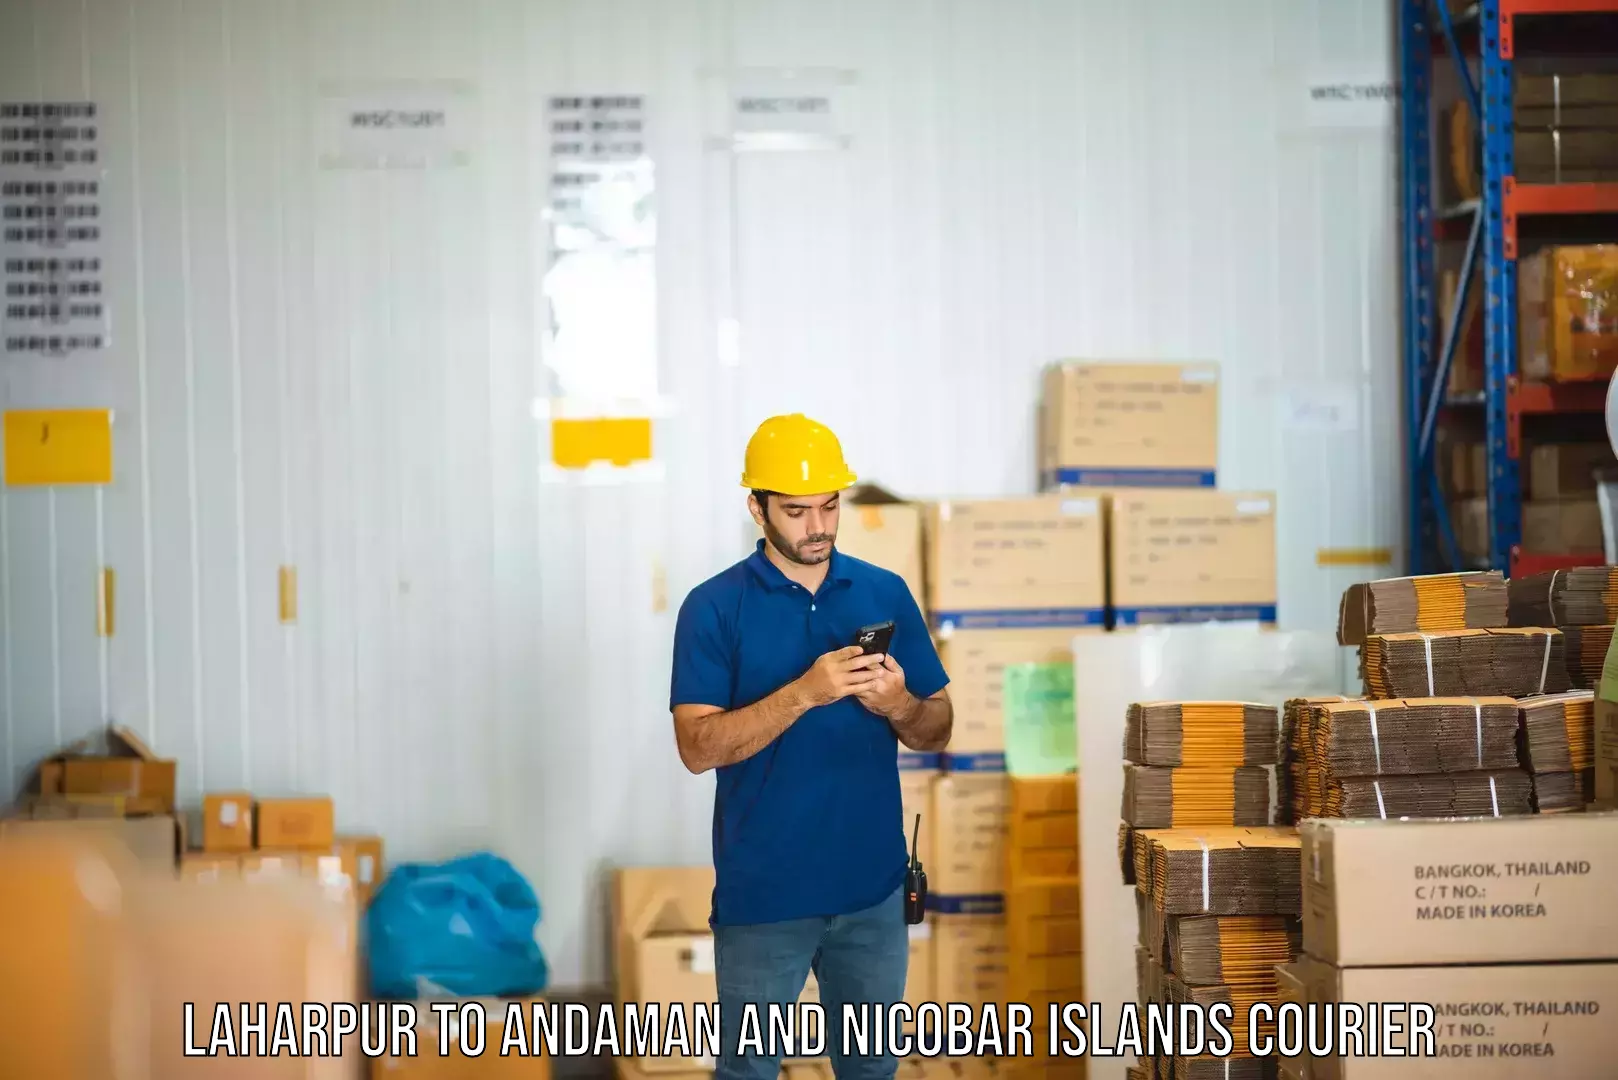 Supply chain efficiency Laharpur to Andaman and Nicobar Islands